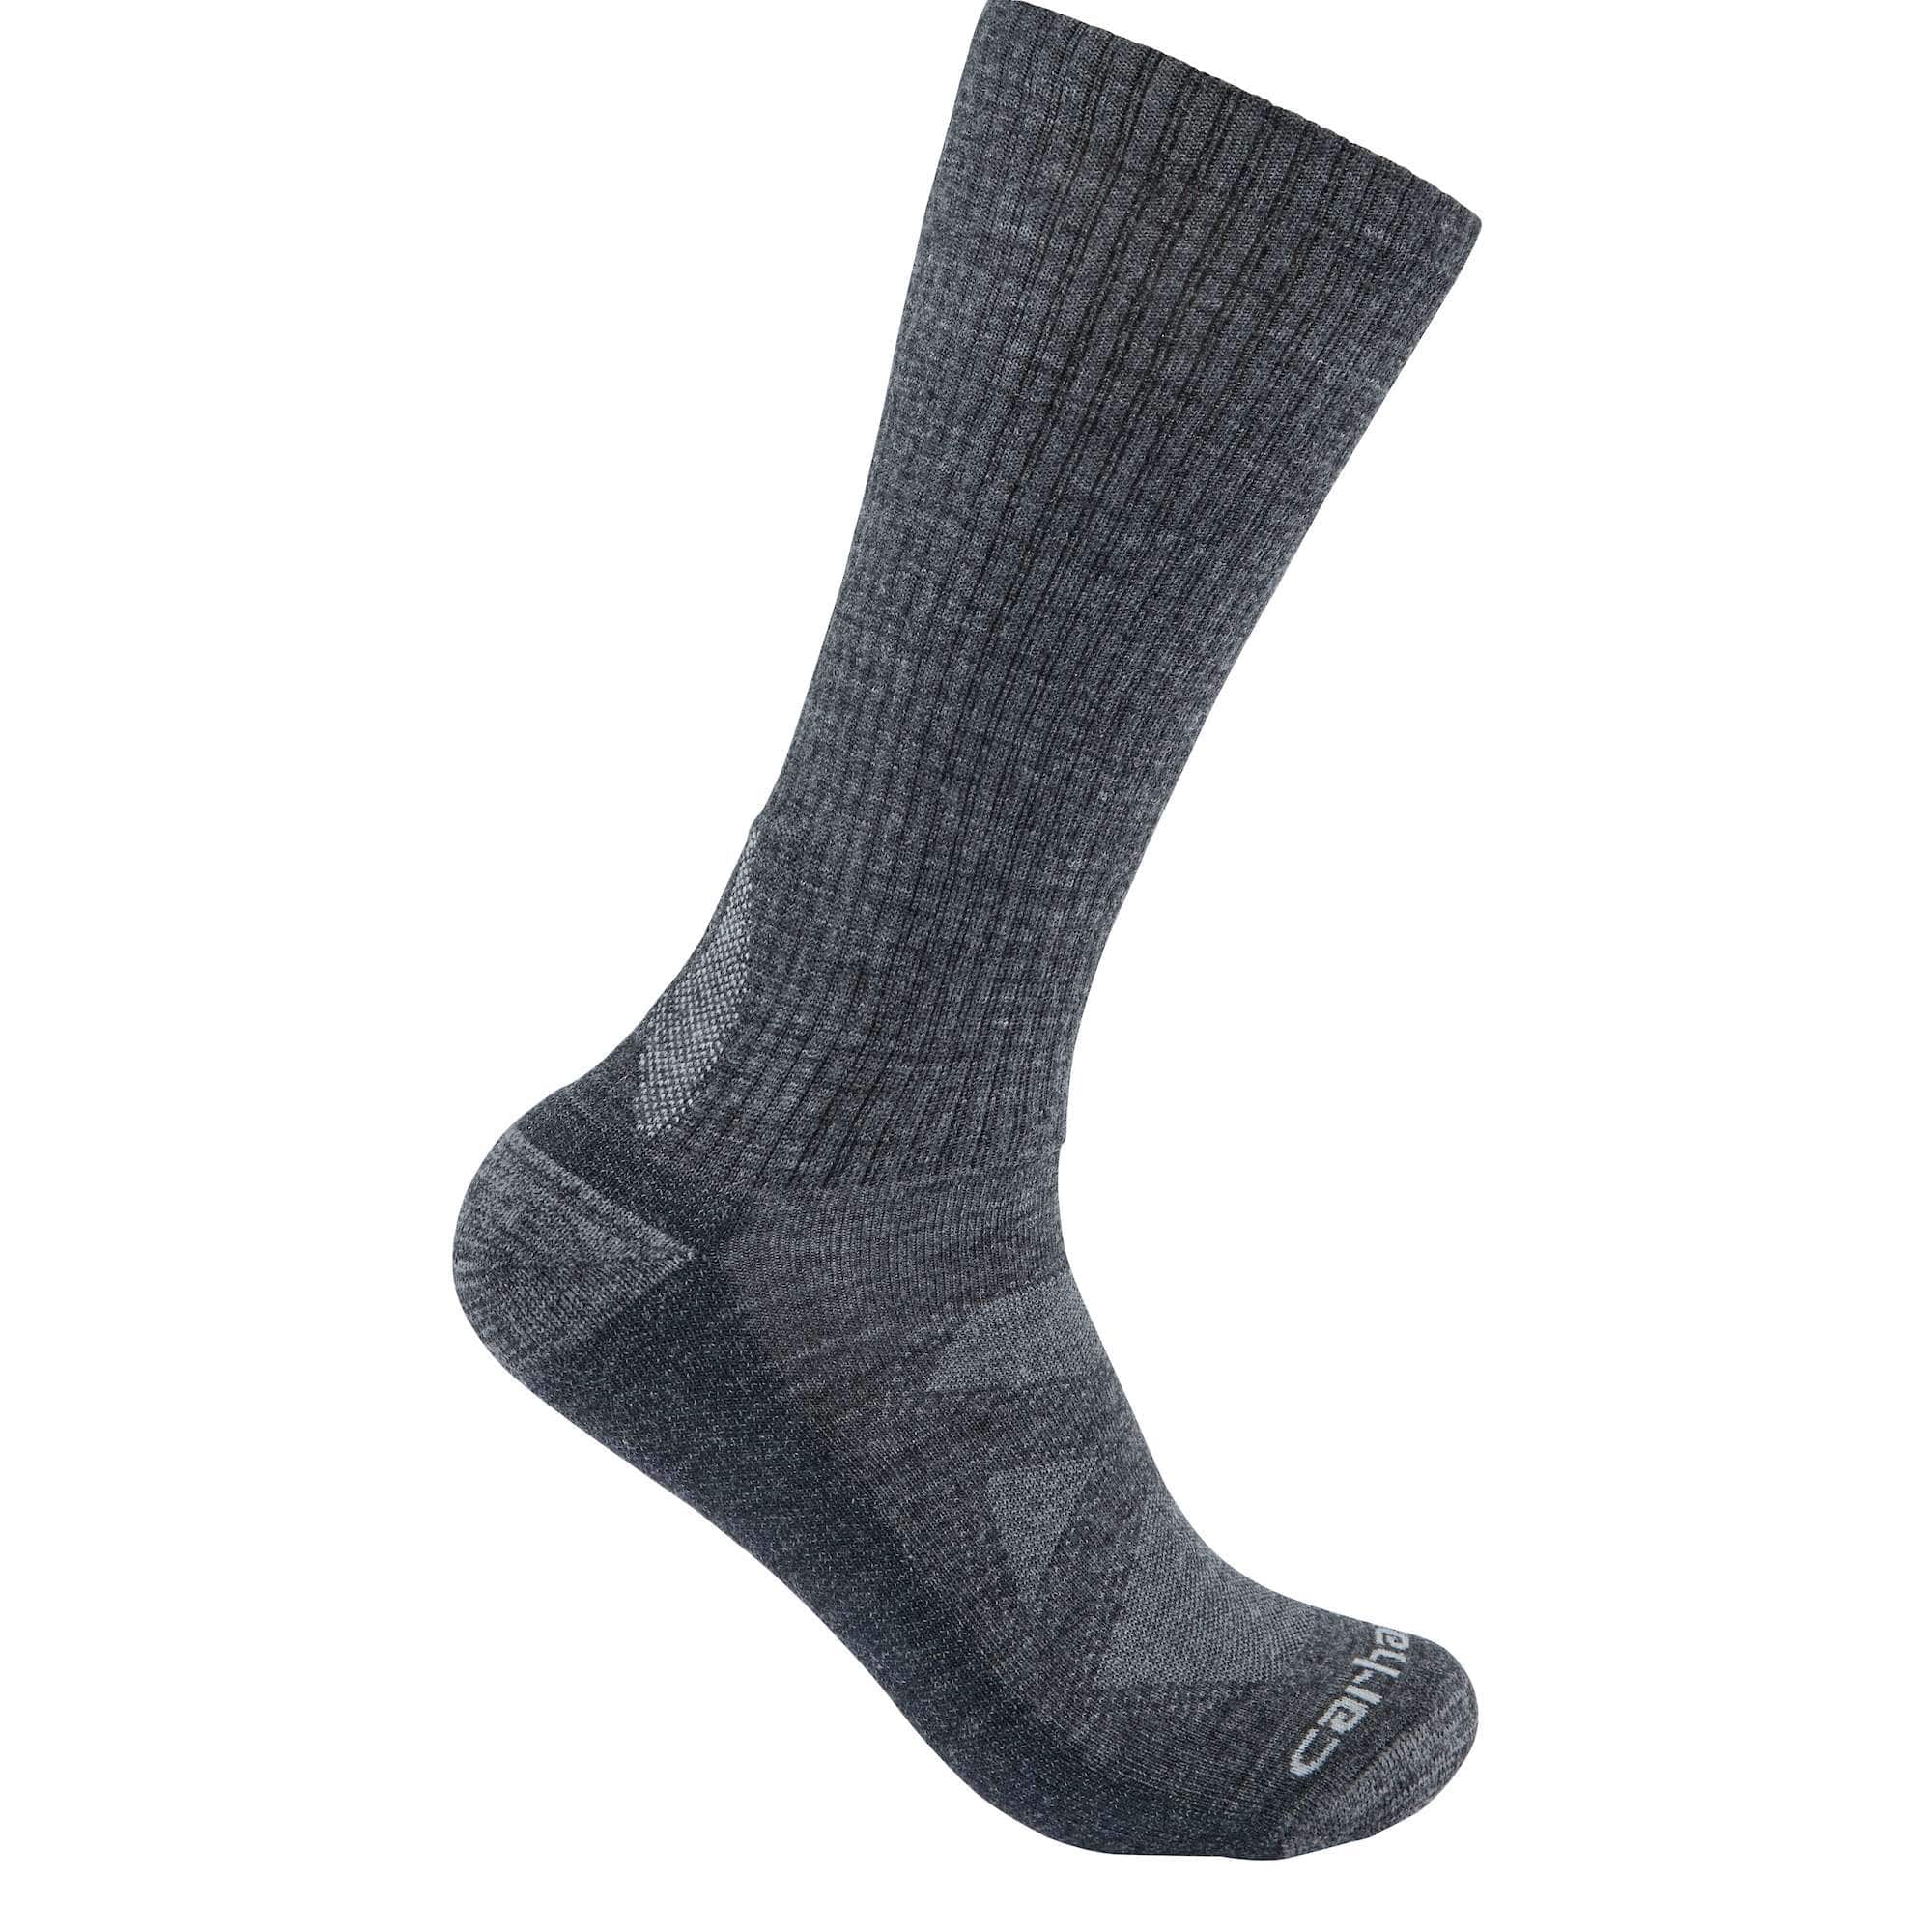 Midweight Merino Wool Blend Boot Sock